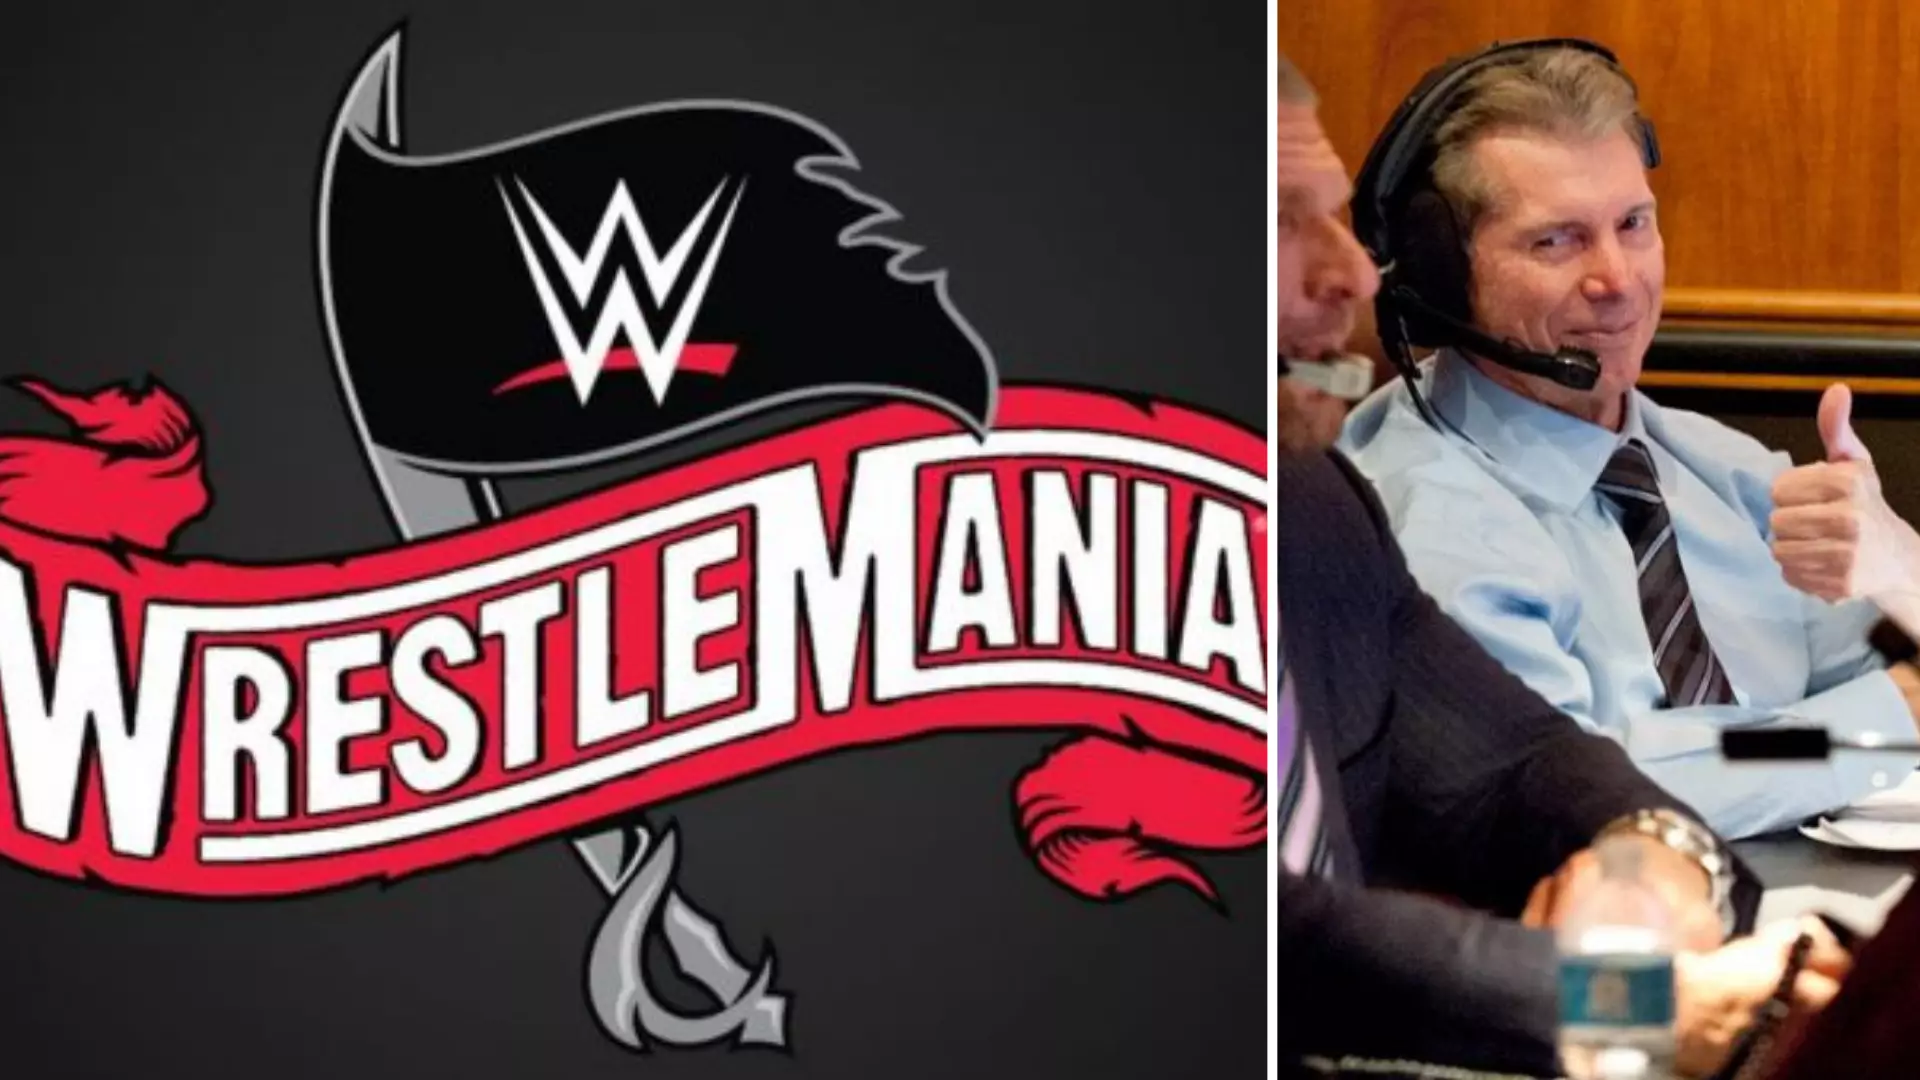 WWE Outlines New WrestleMania 36 Plans Amid Coronavirus Outbreak